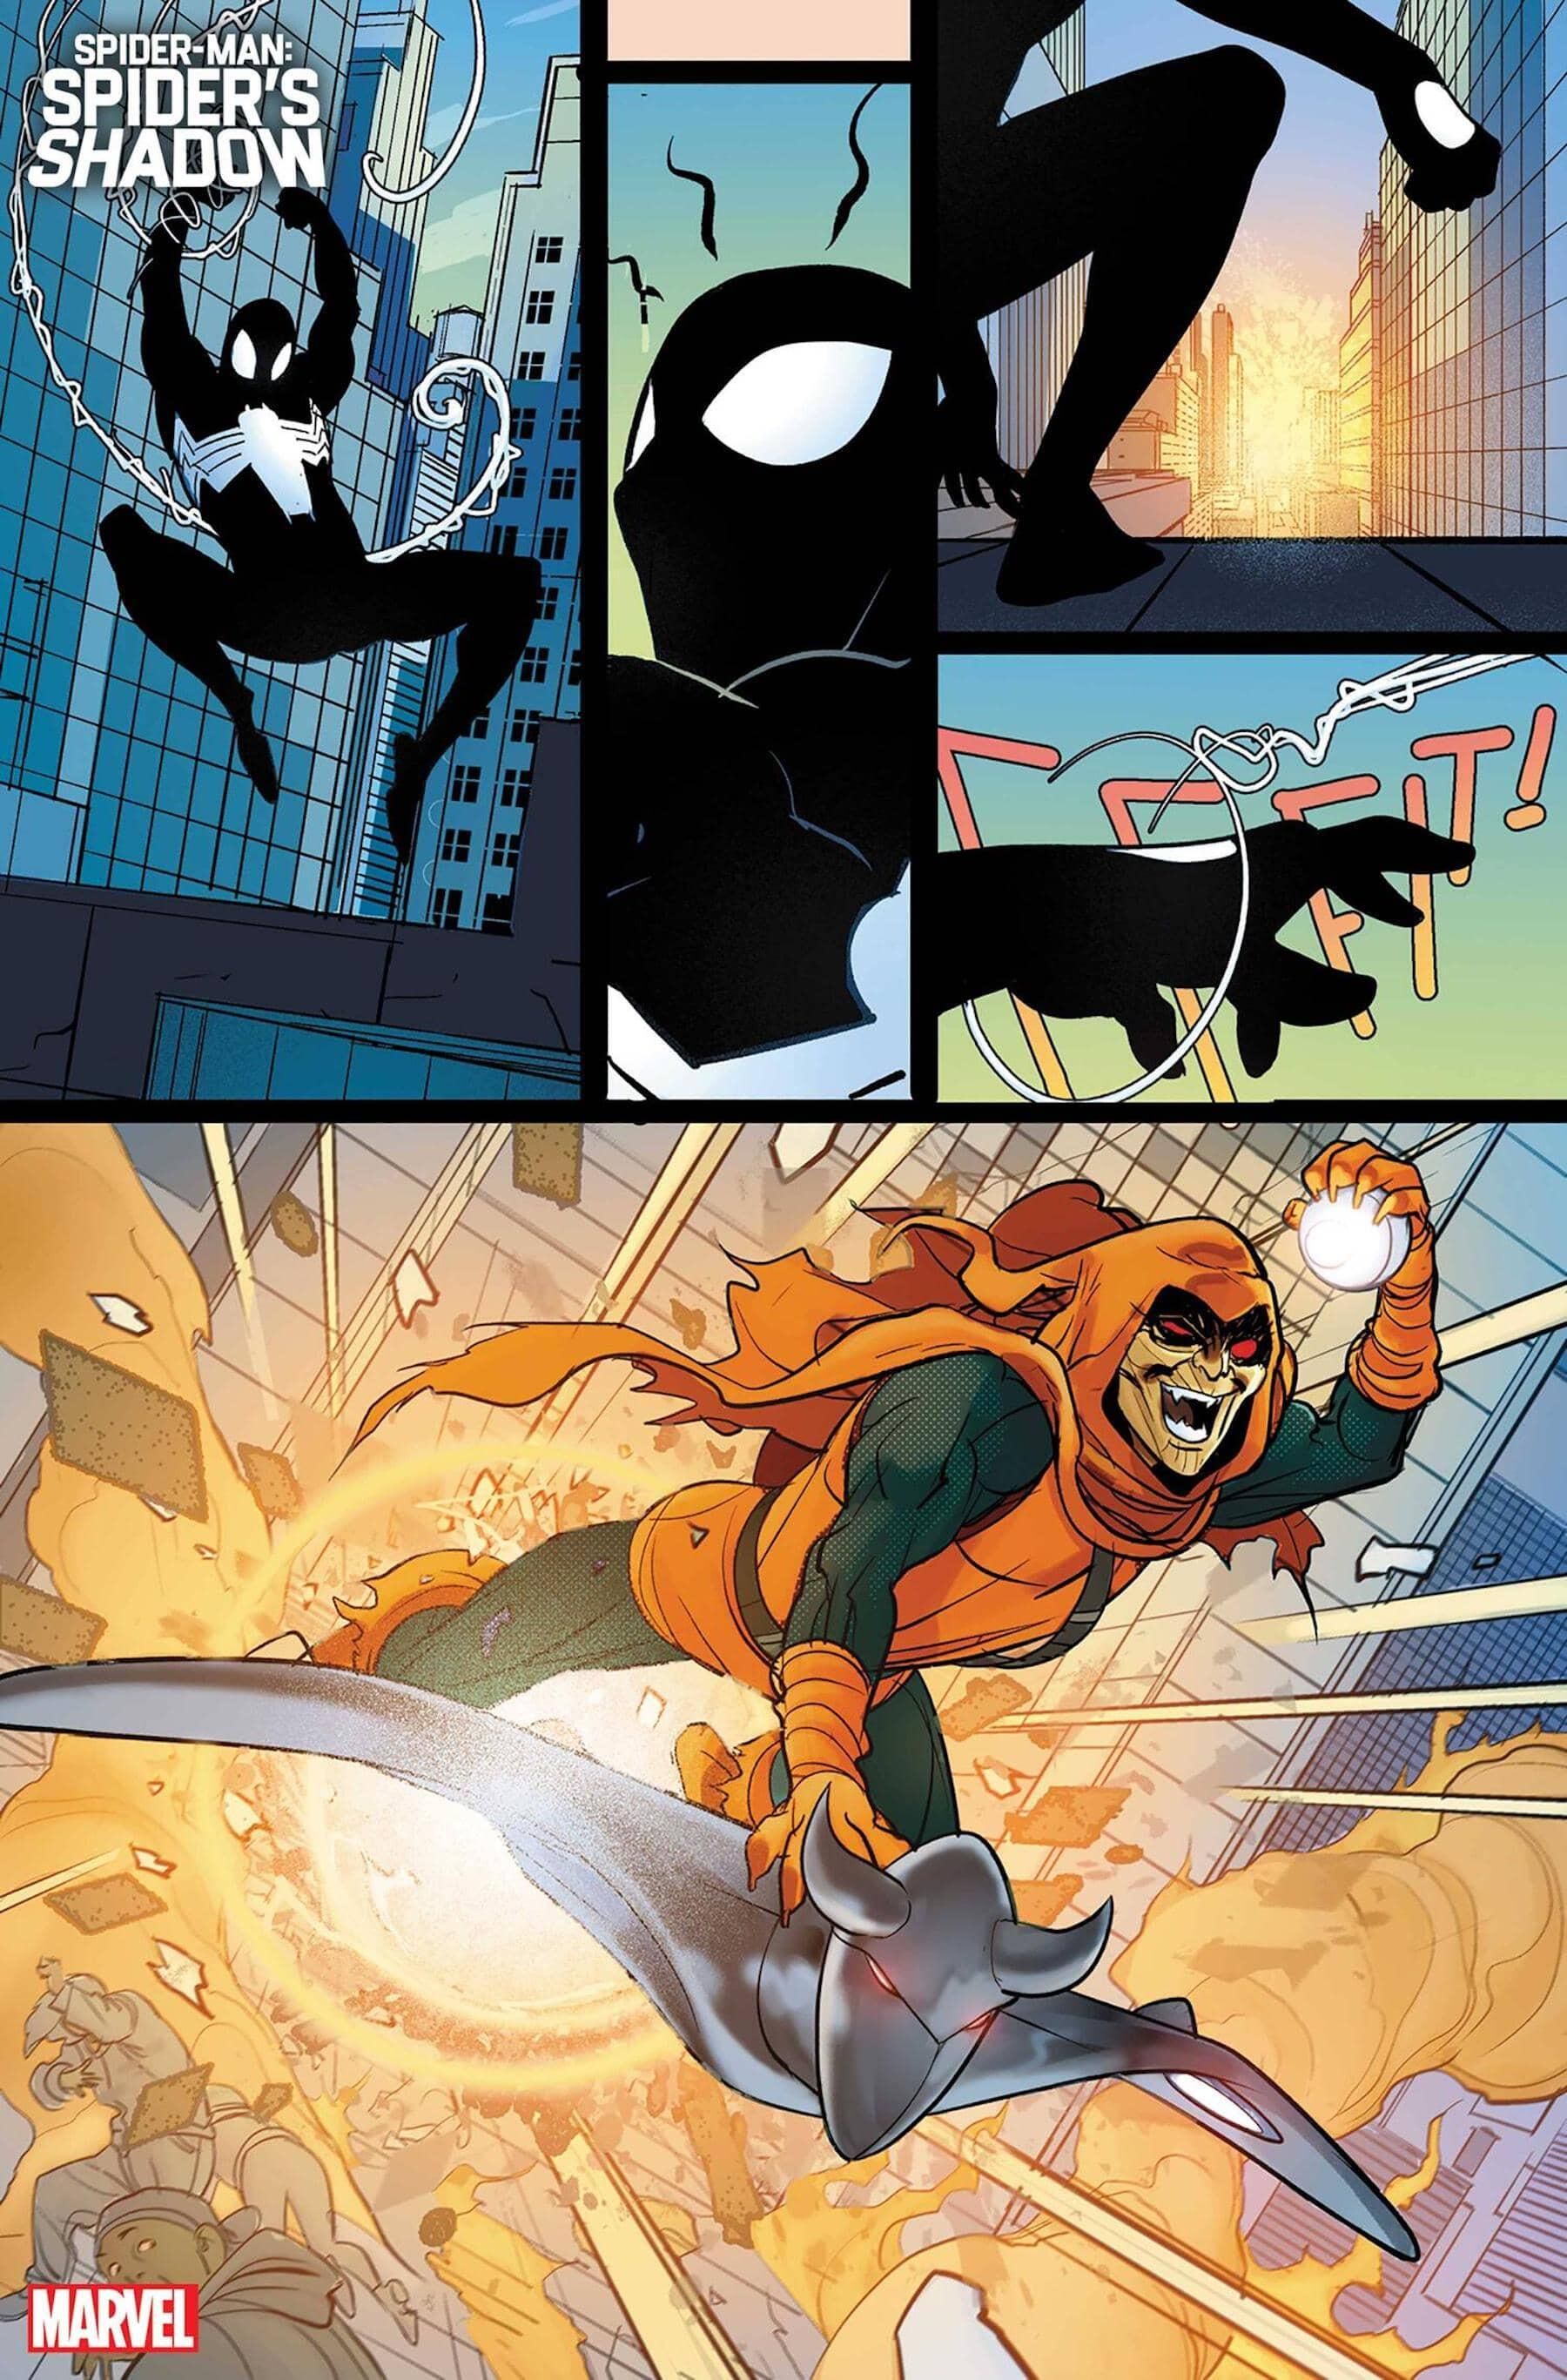 SpiderMan Goes Full Venom In New Marvel Comics Series